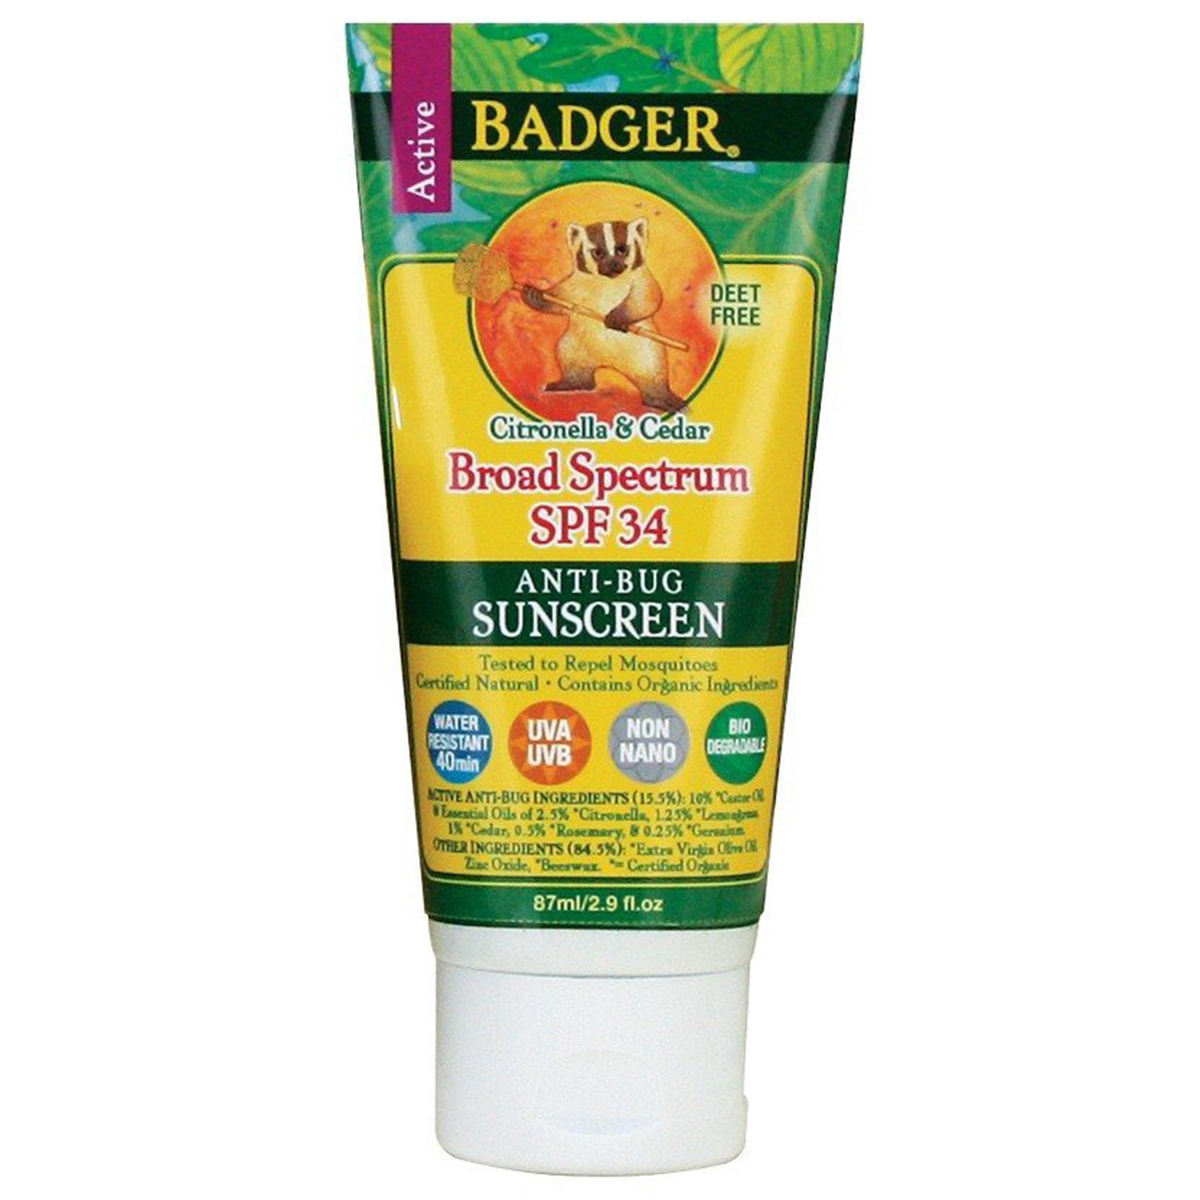 Badger Anti-Bug Sunscreen